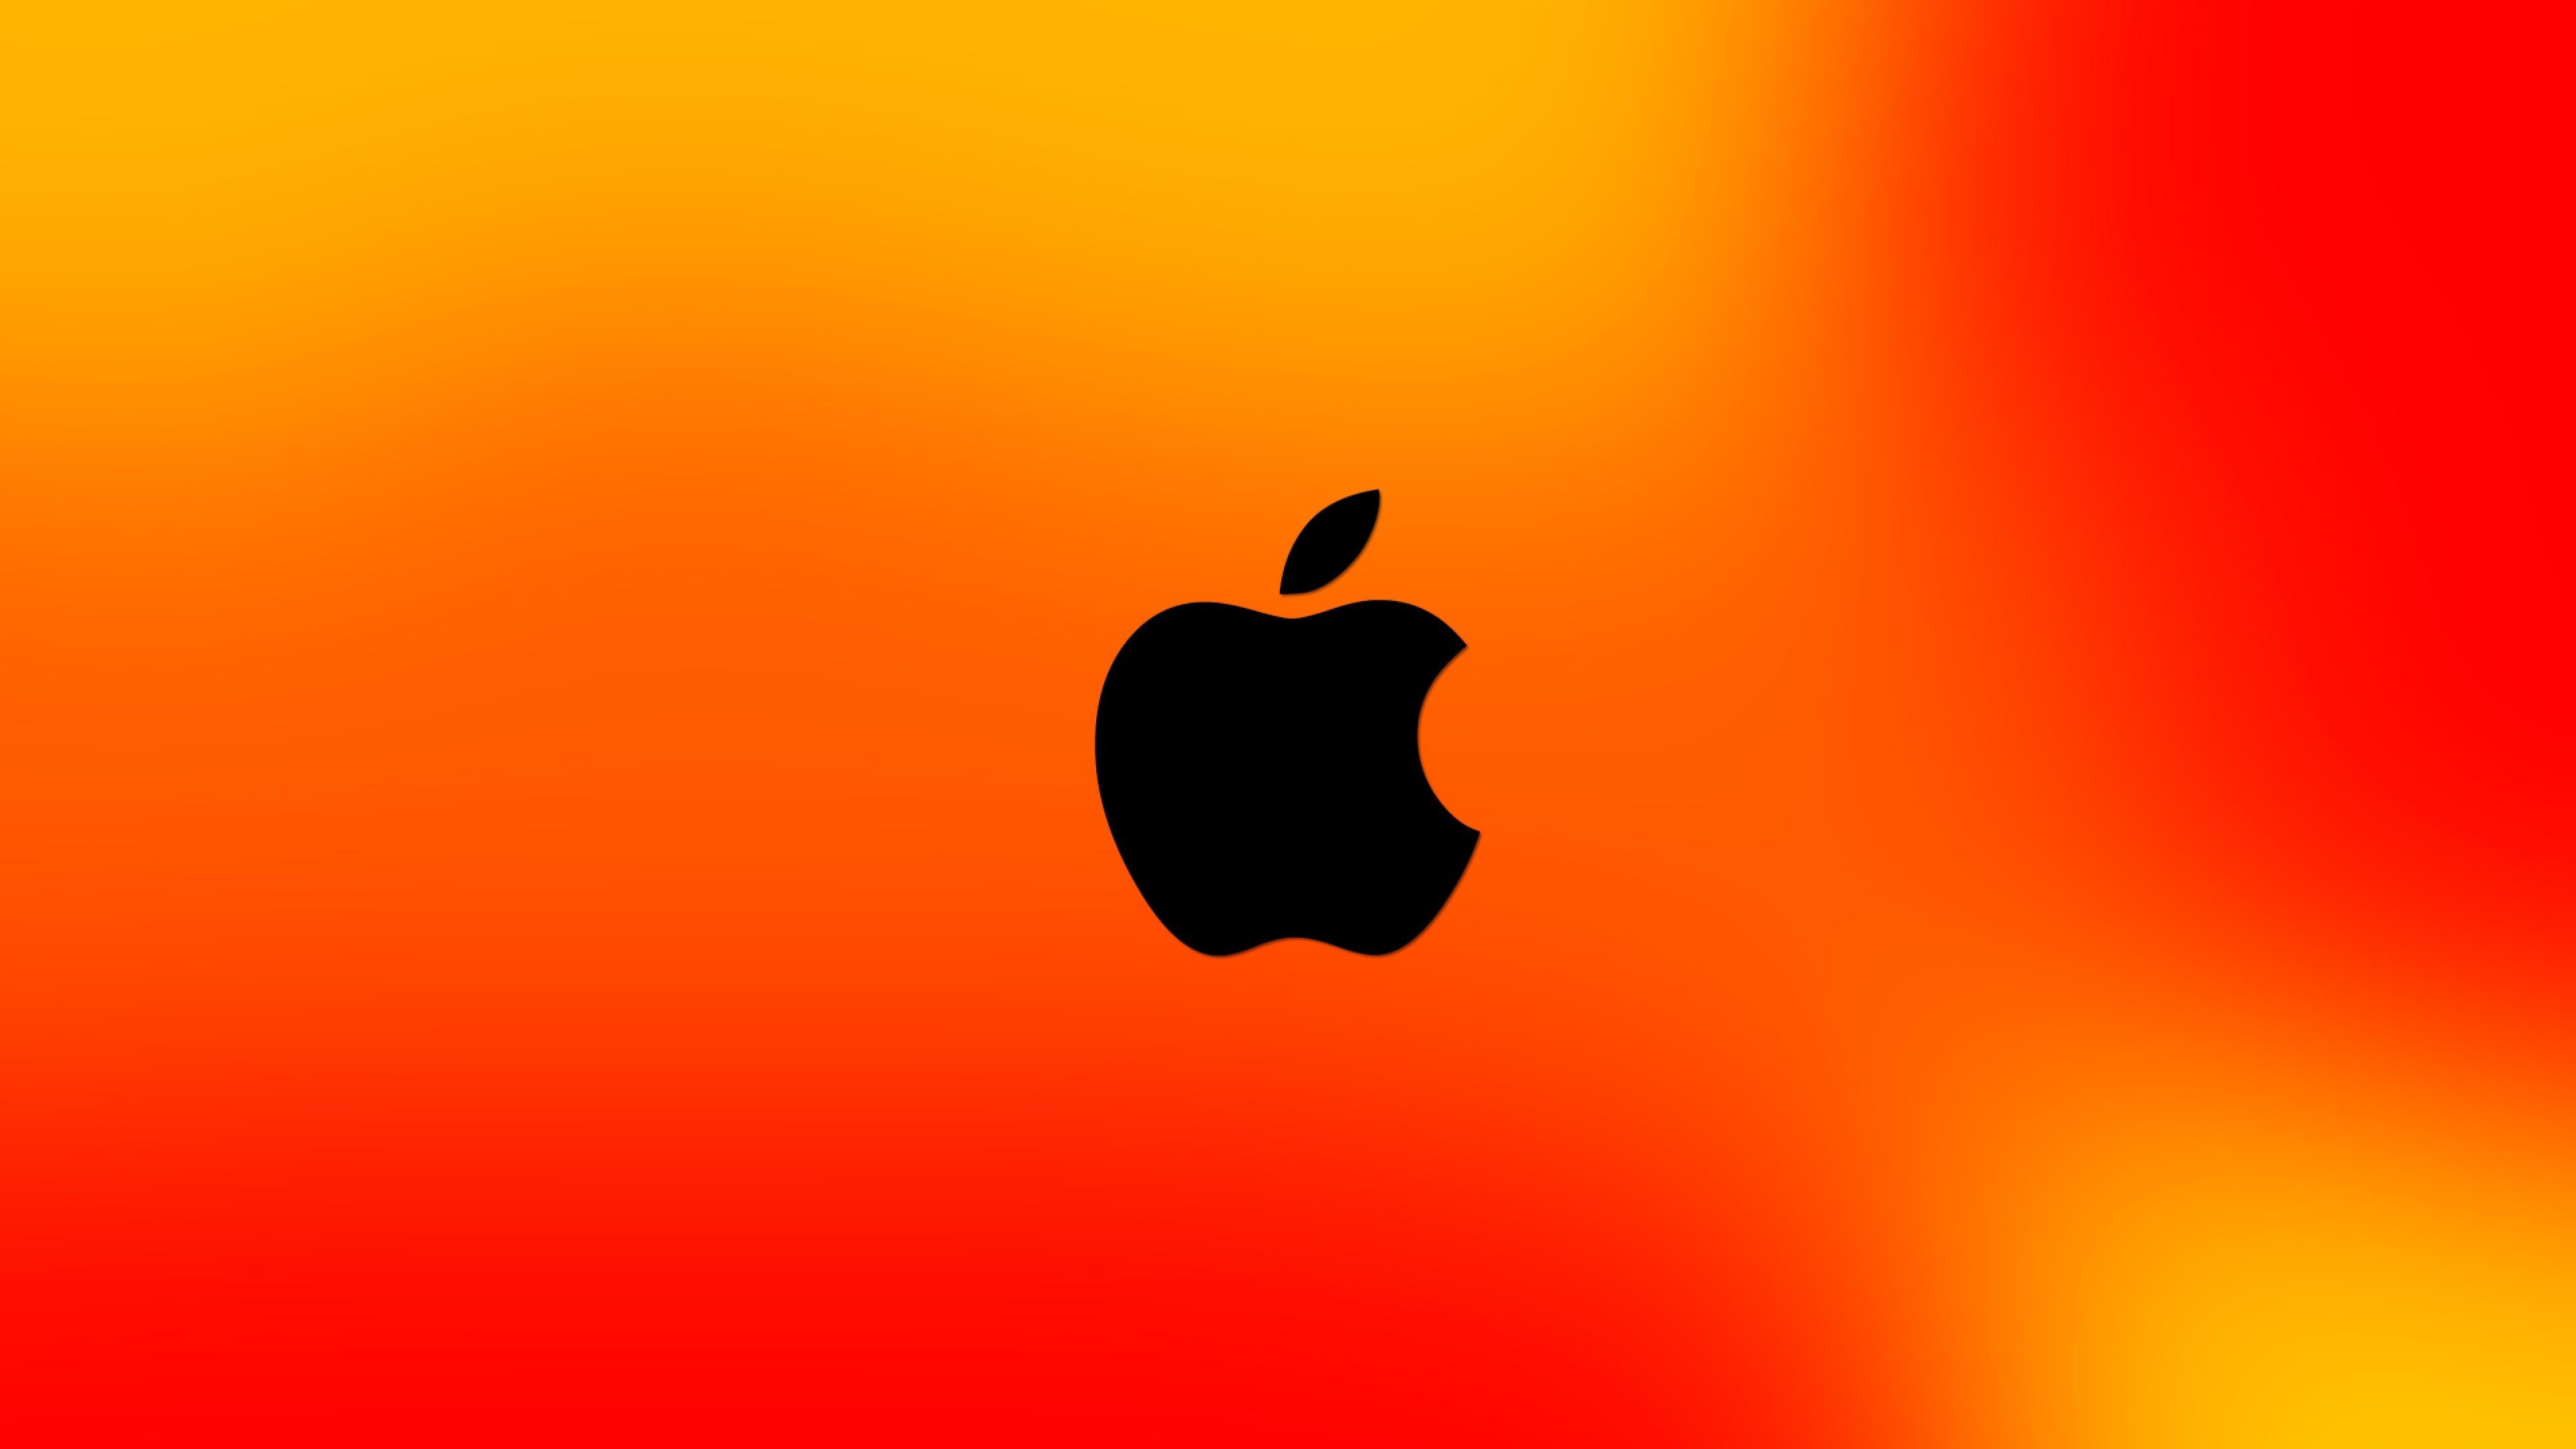 Apple получила патент на новый iPhone